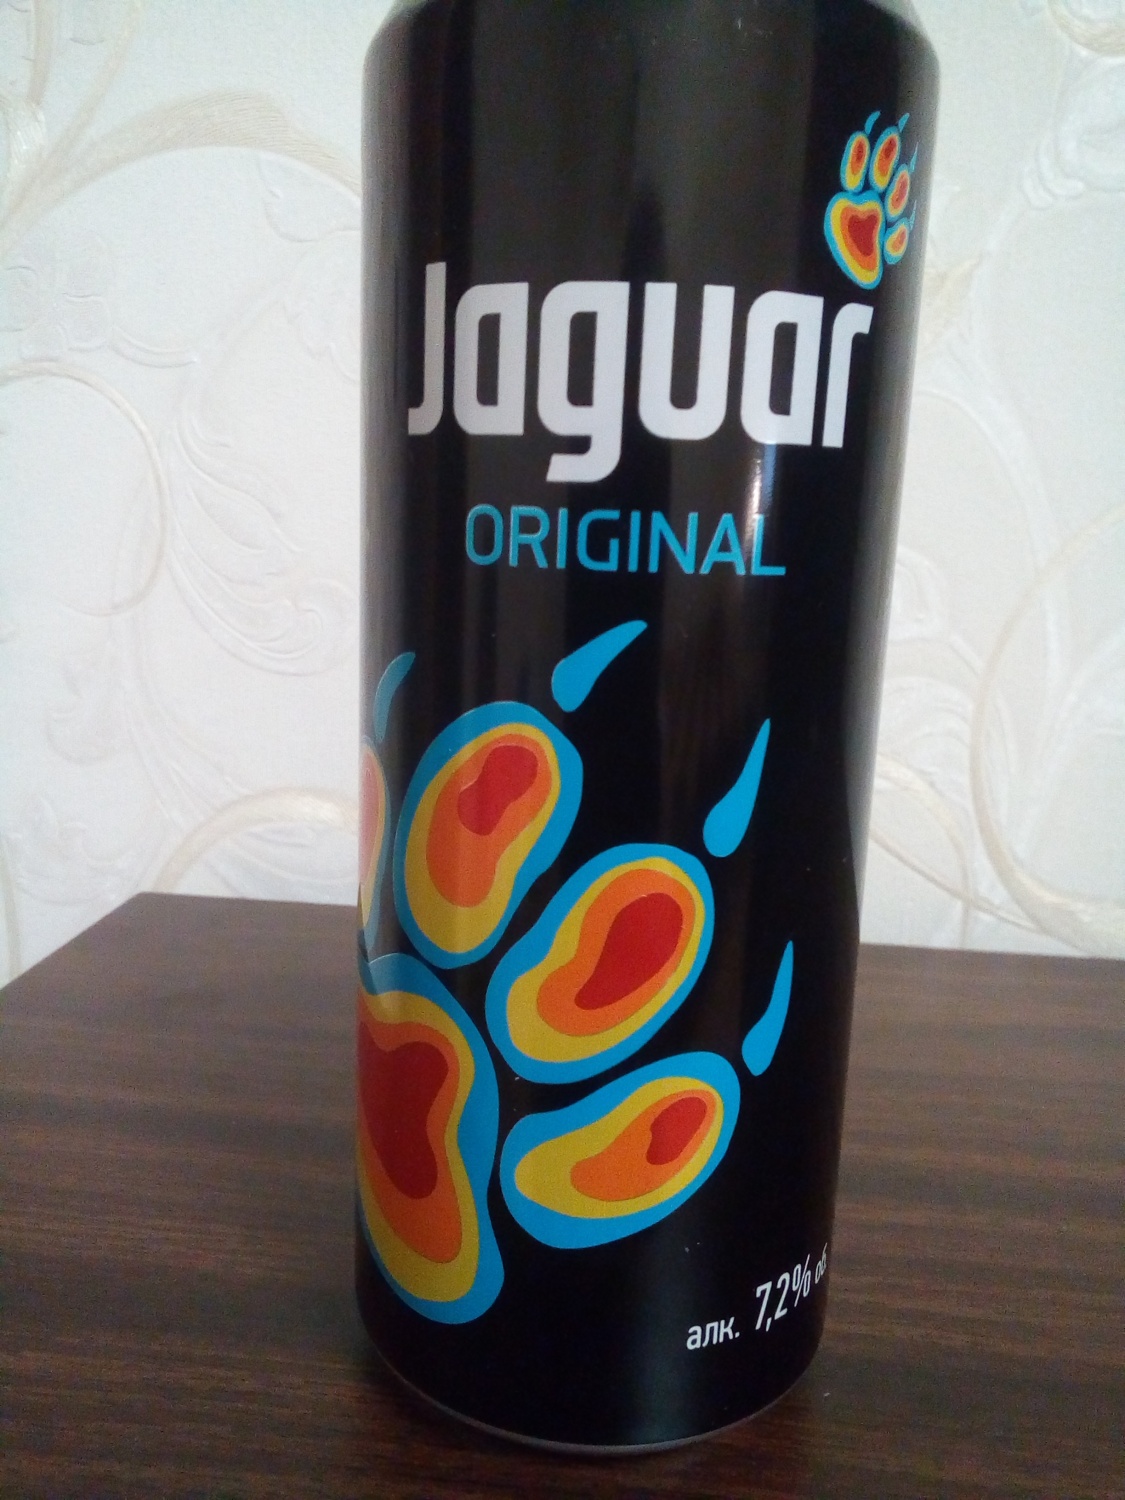   Jaguar original - -   